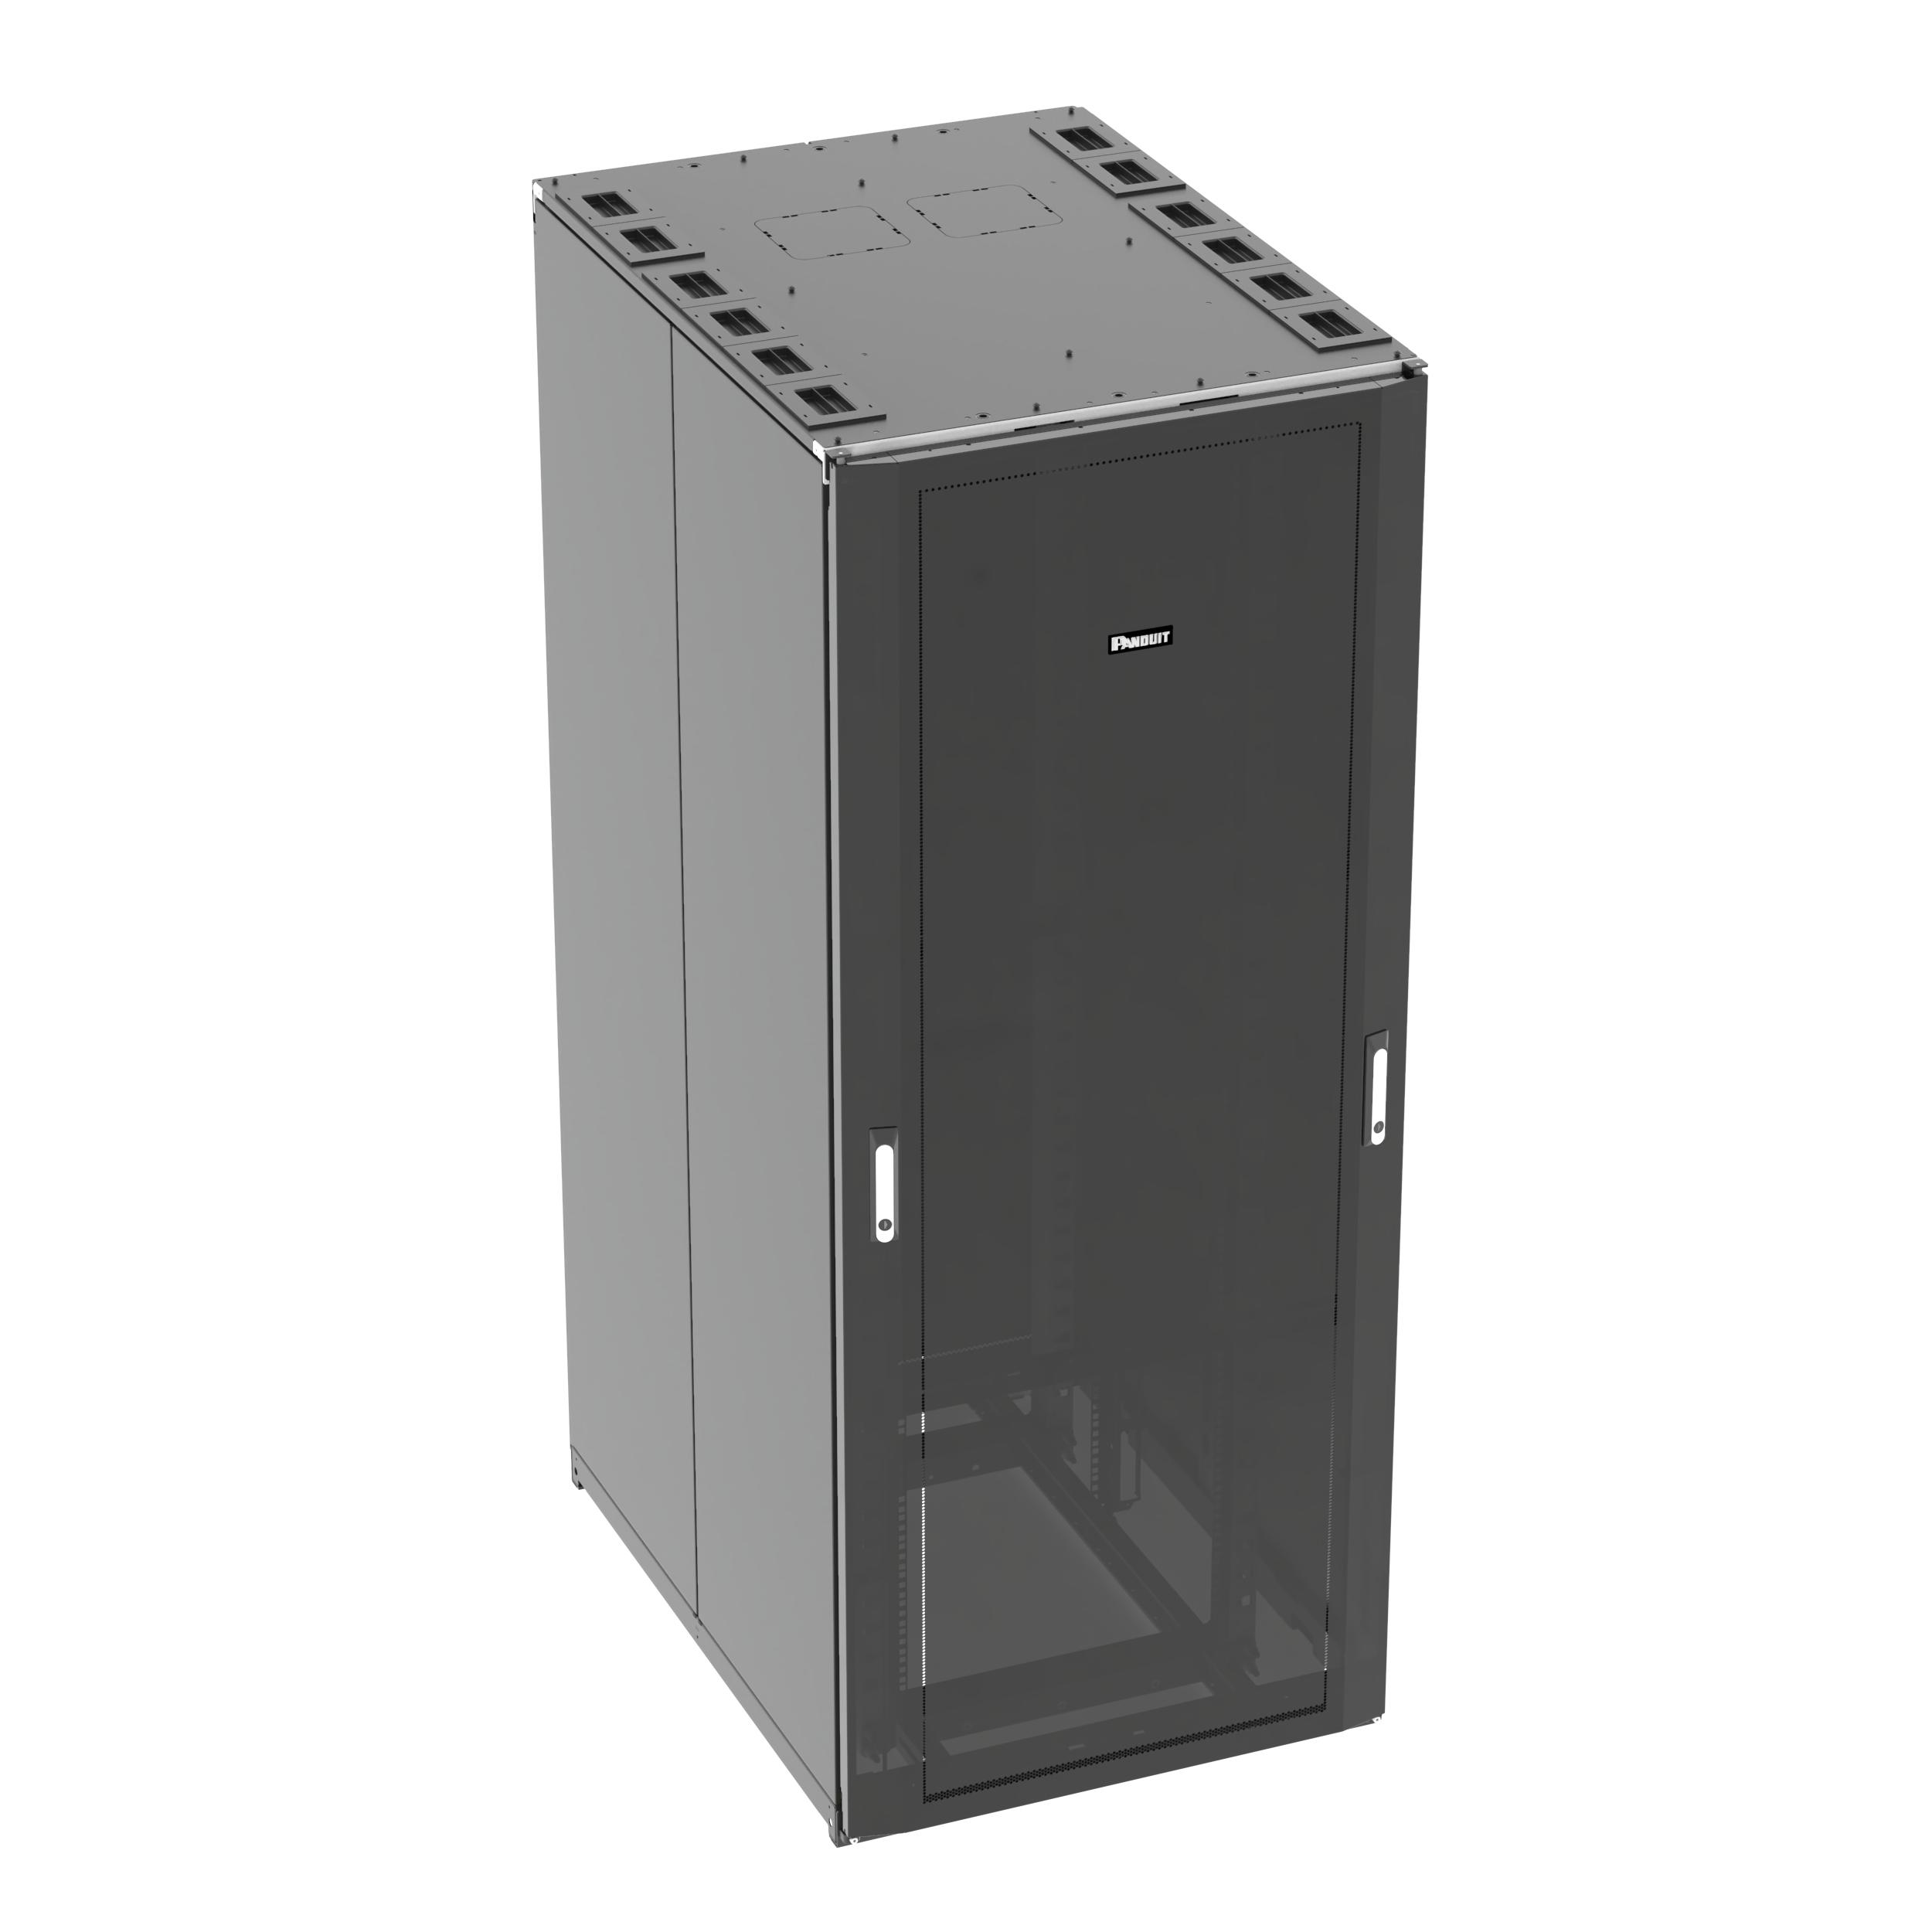 Panduit N8212BC Net-Access™ N-Type Cabinet